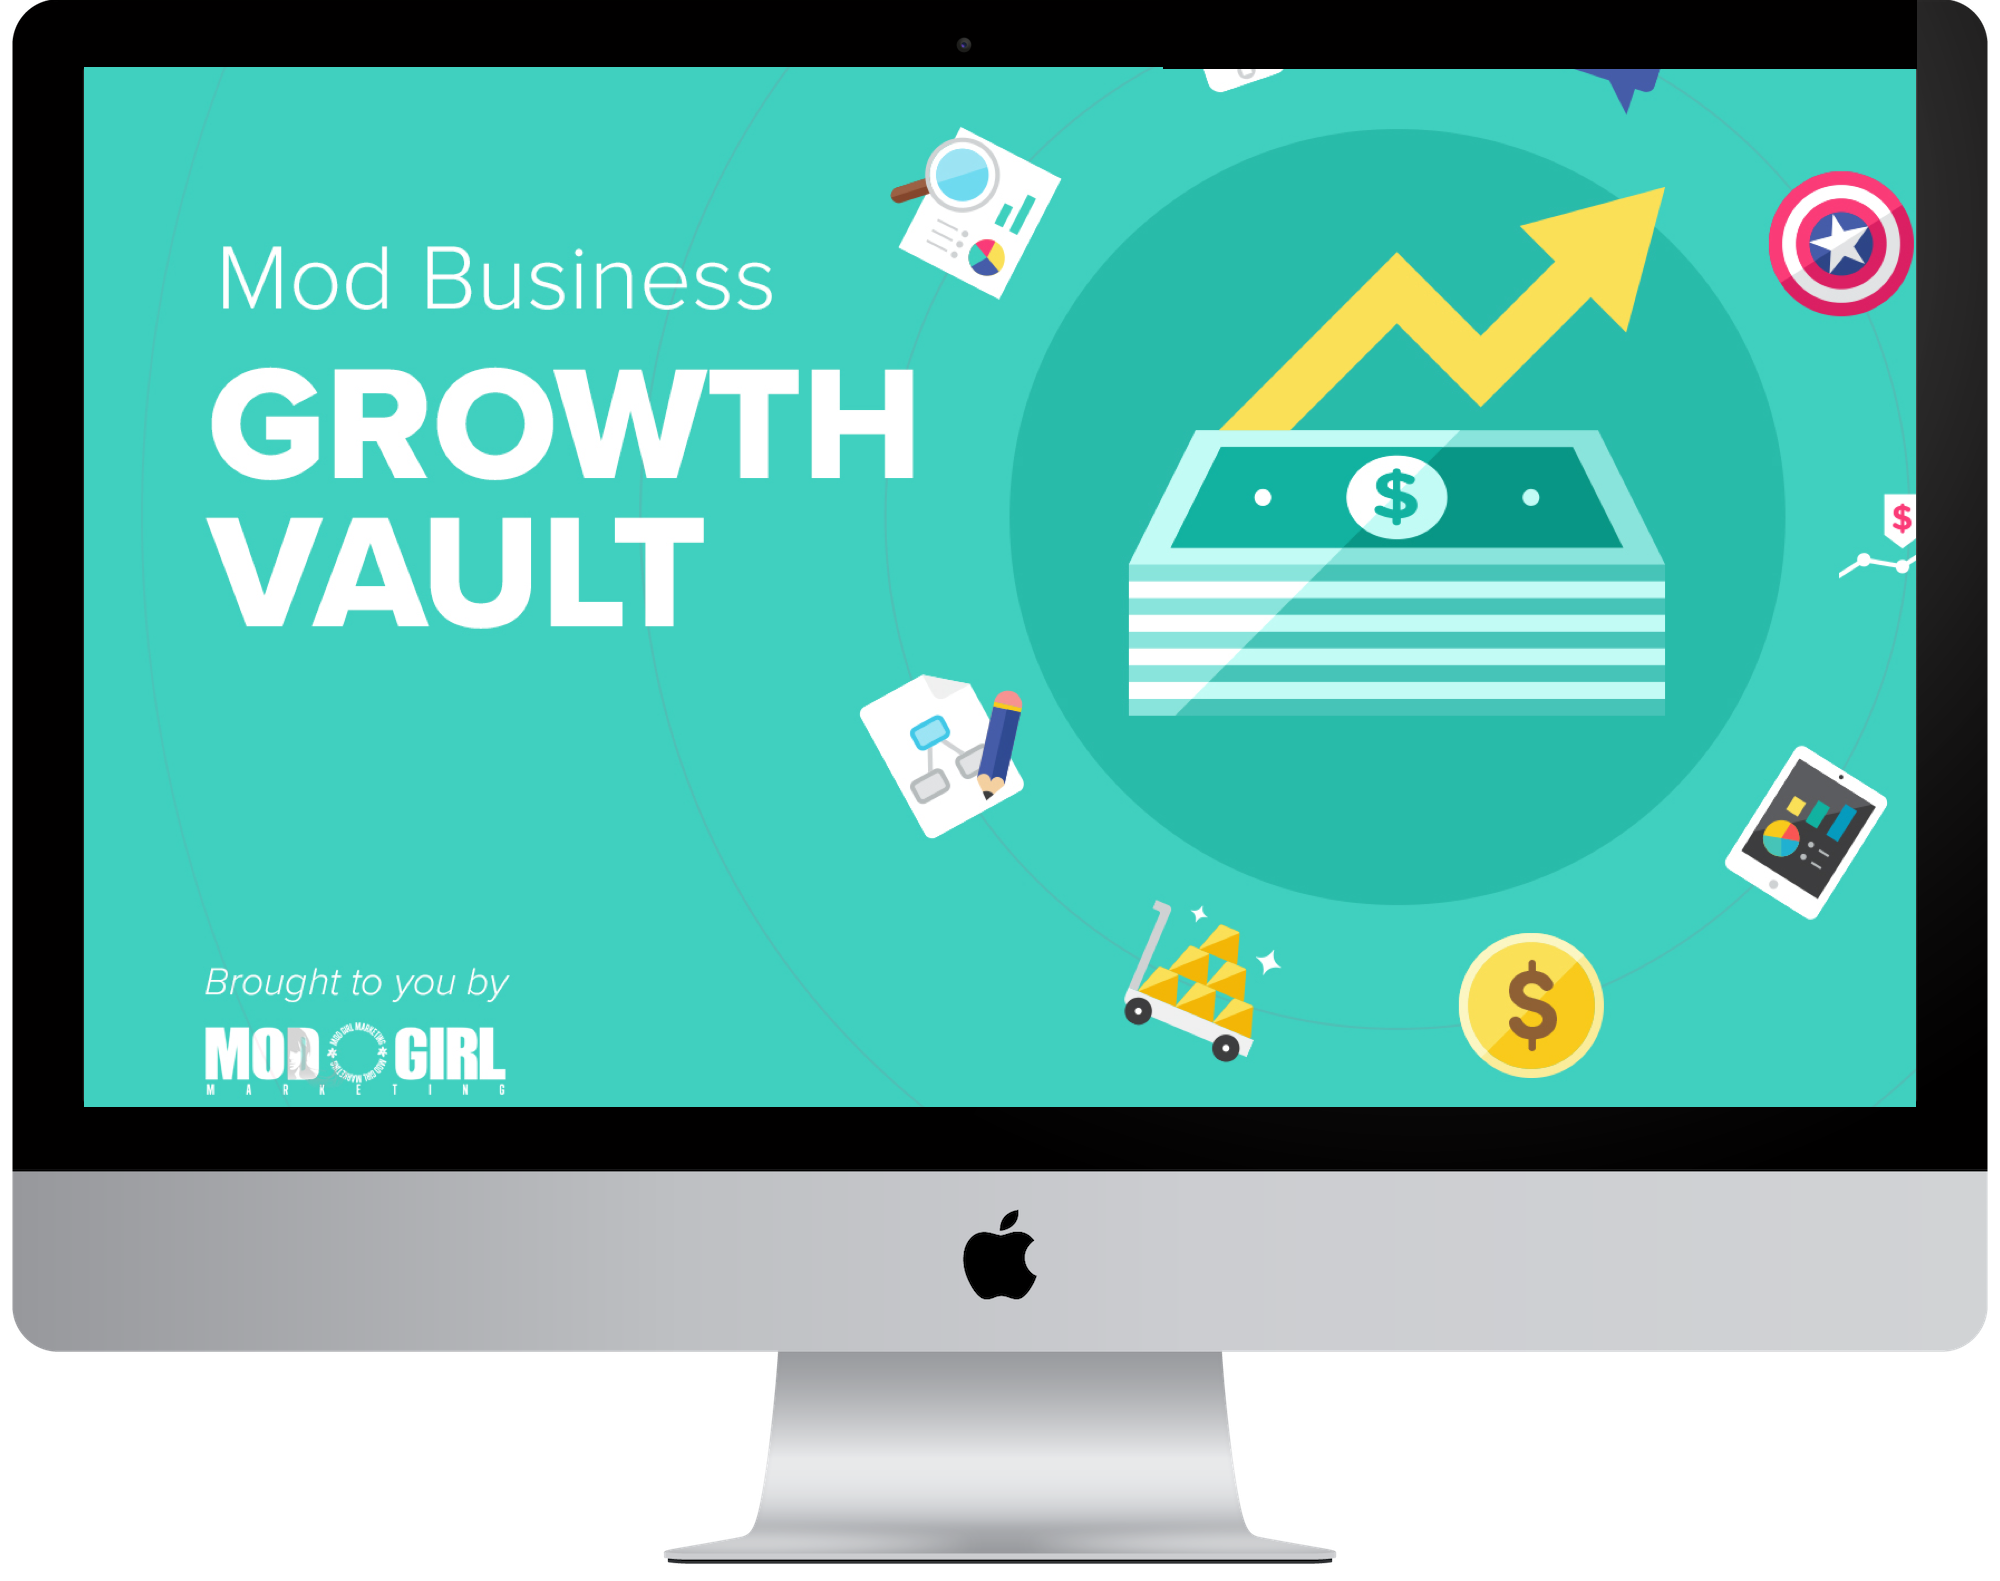 Mod Business Growth Vault